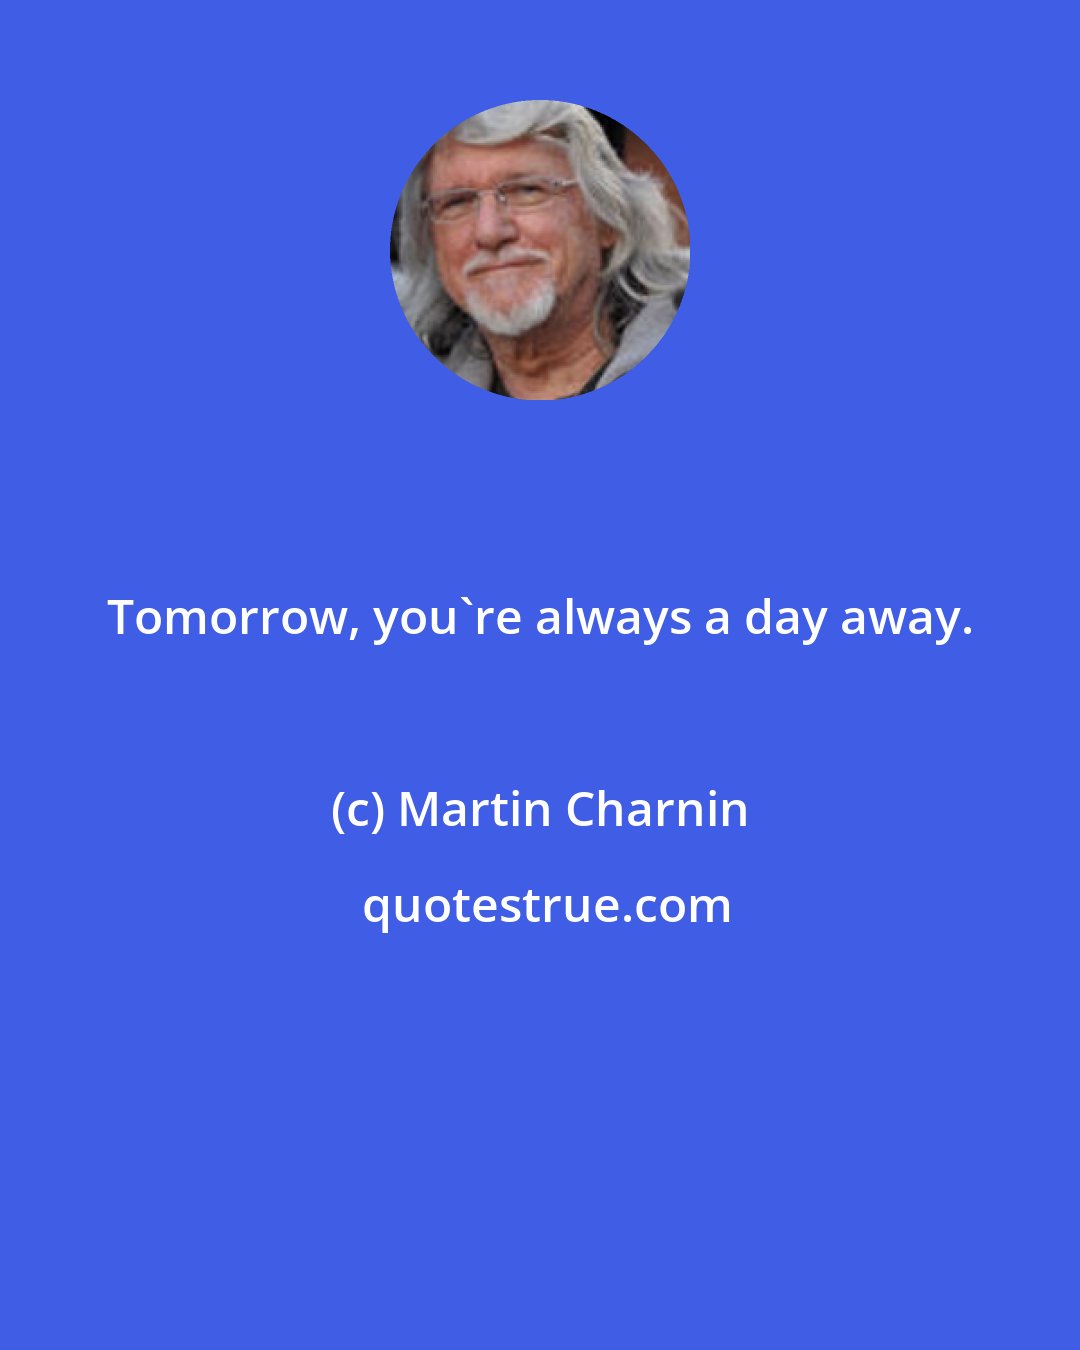 Martin Charnin: Tomorrow, you're always a day away.